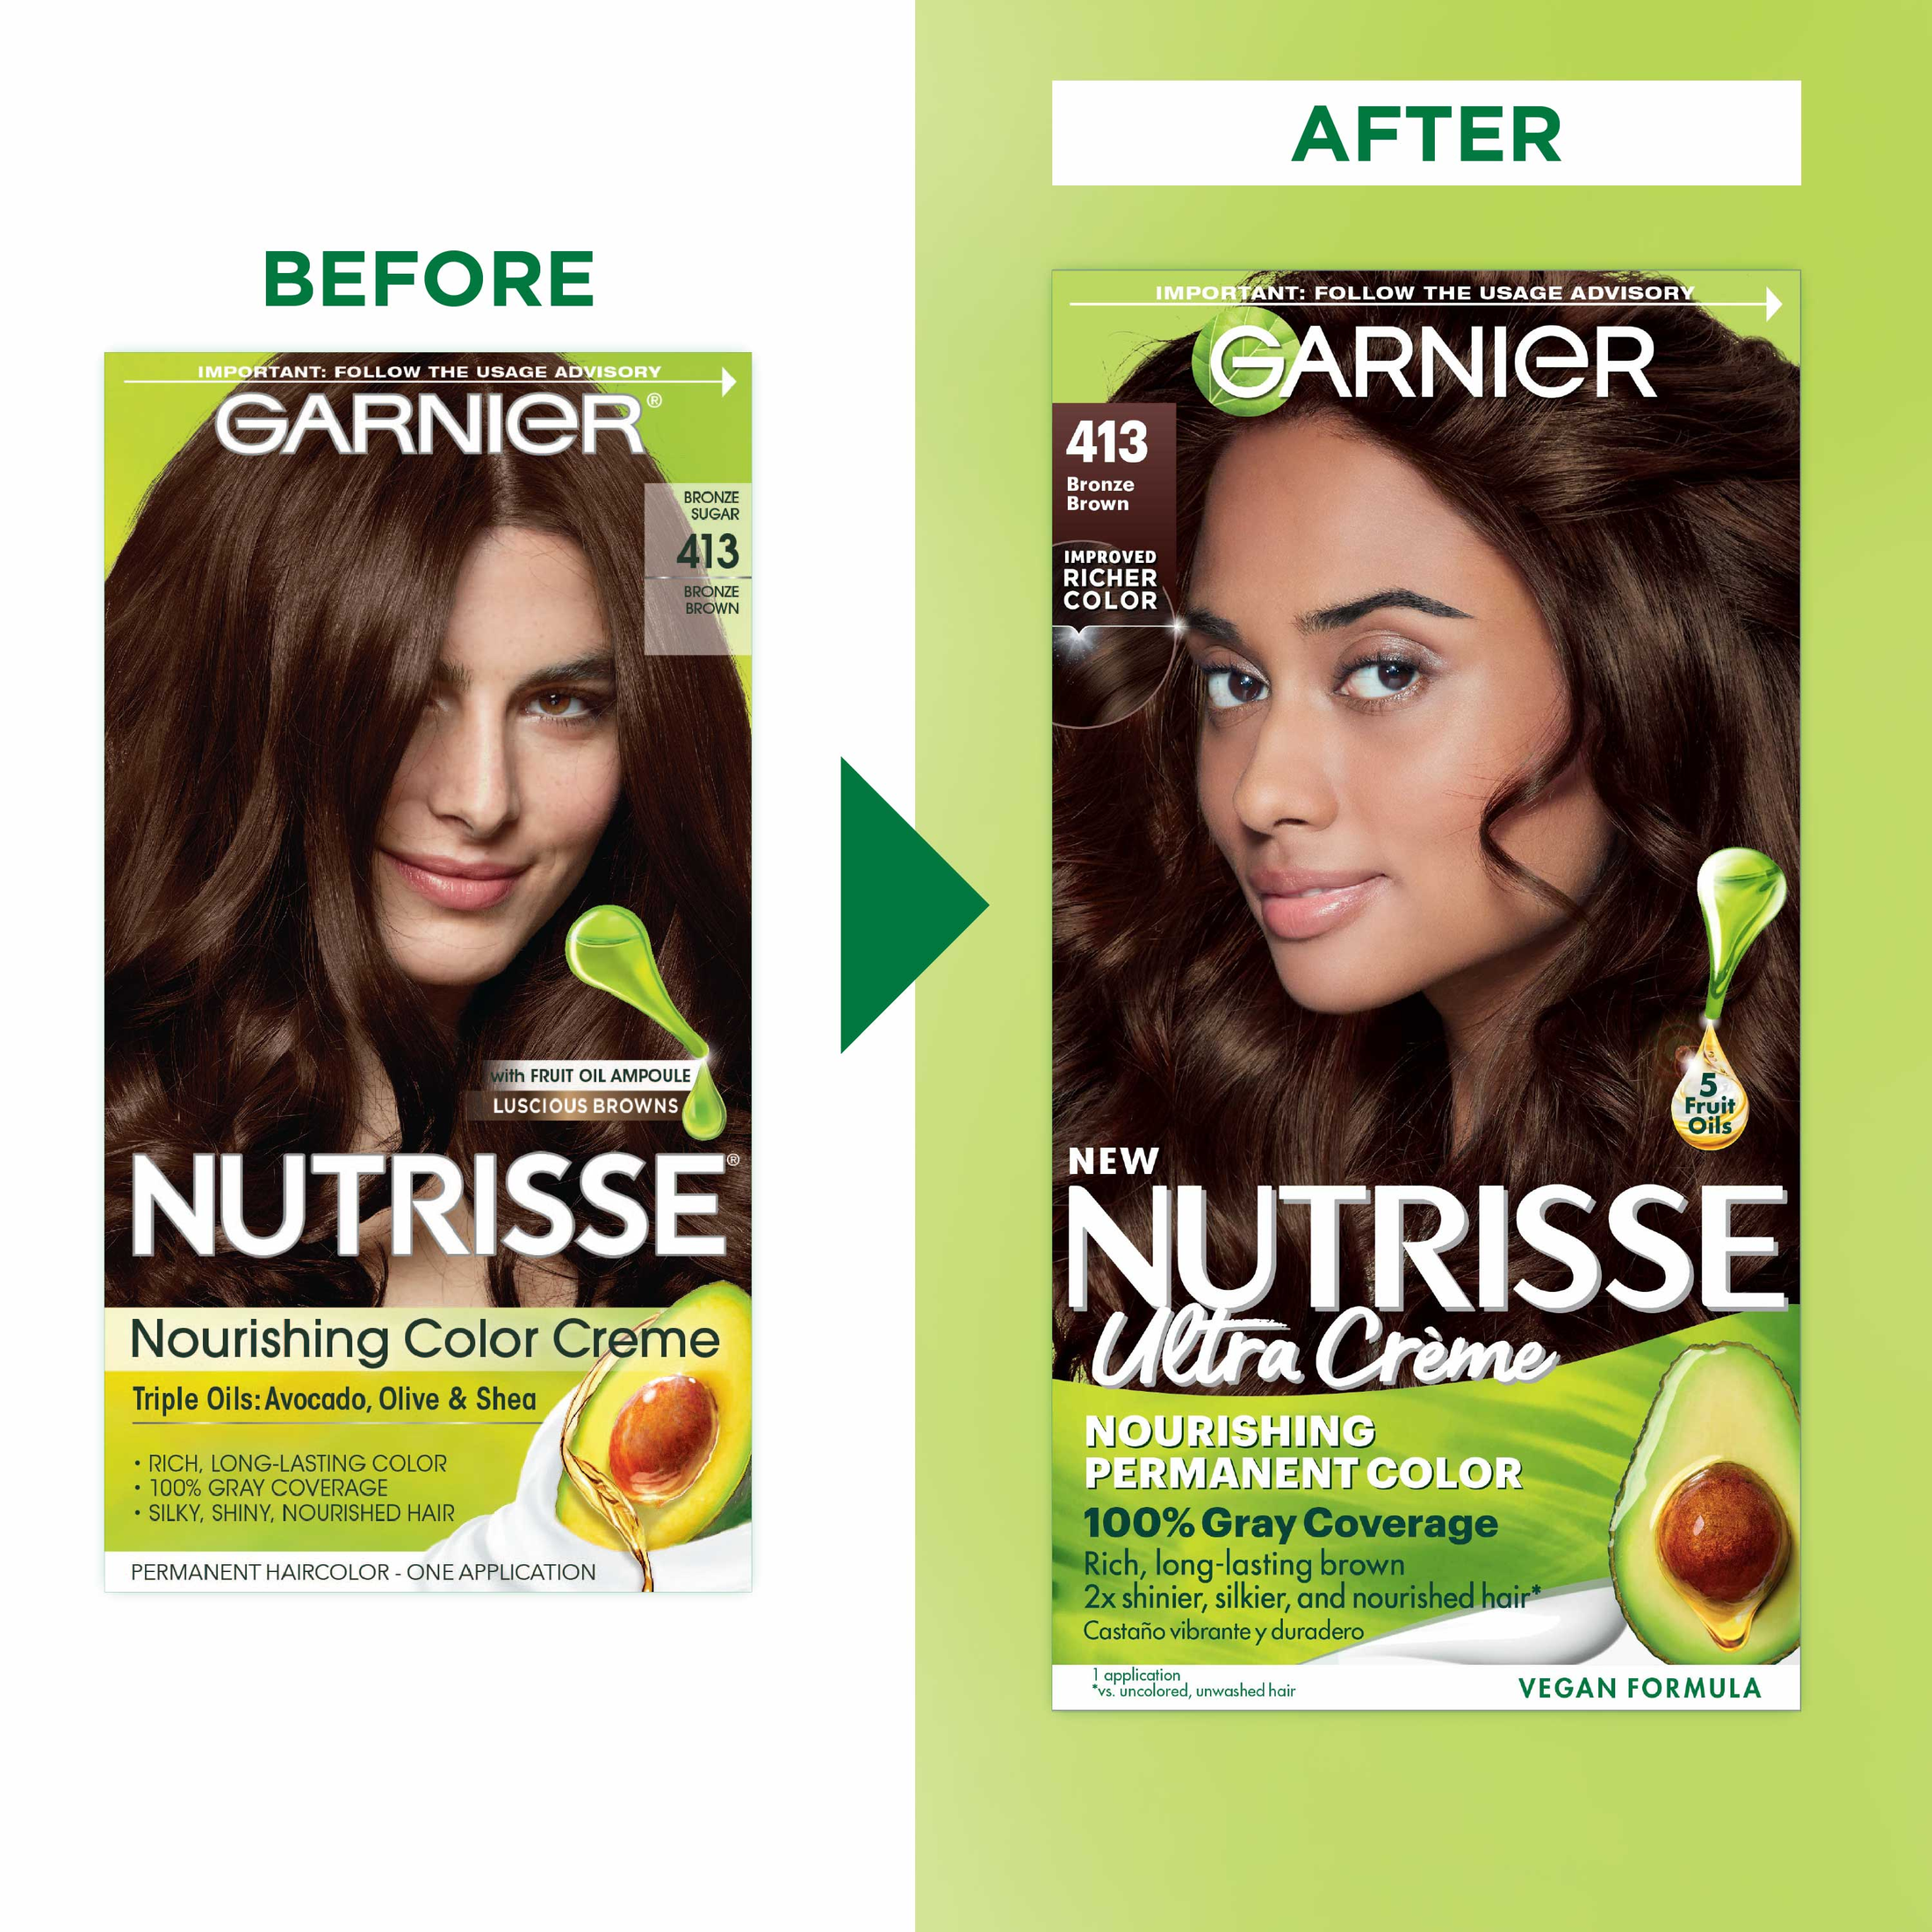 Garnier Nutrisse Nourishing Hair Color Creme, 413 Bronze Brown - image 3 of 11